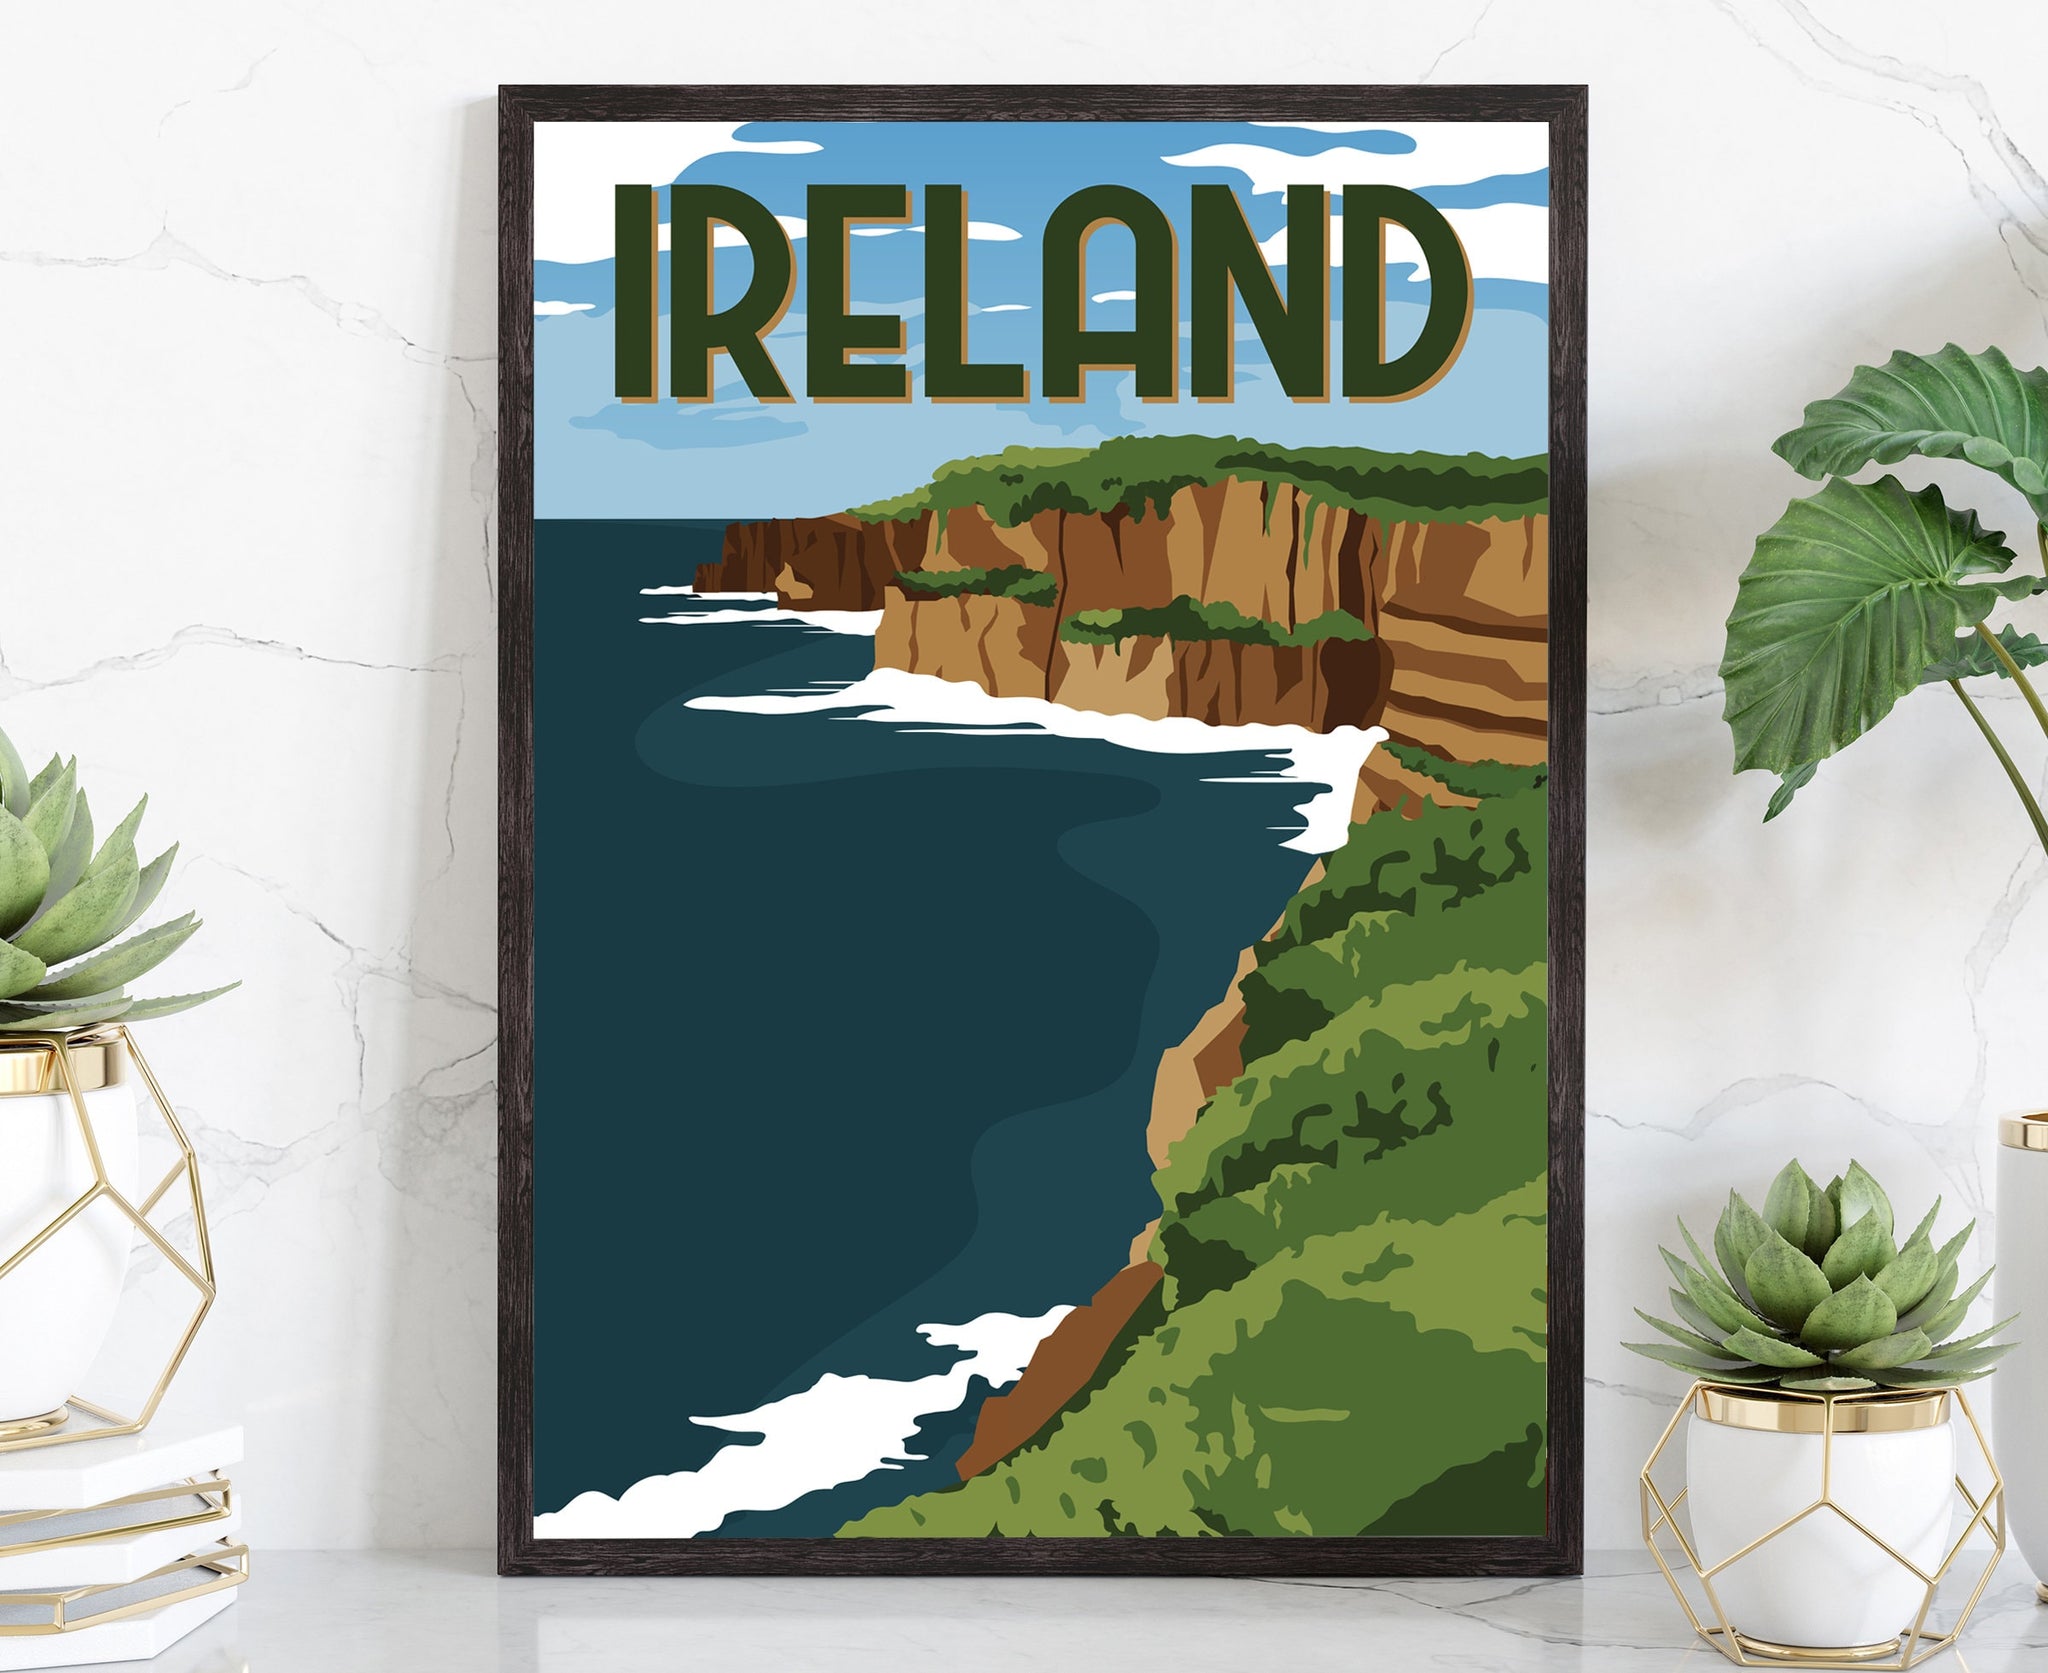 Ireland Vintage Rustic Poster Print